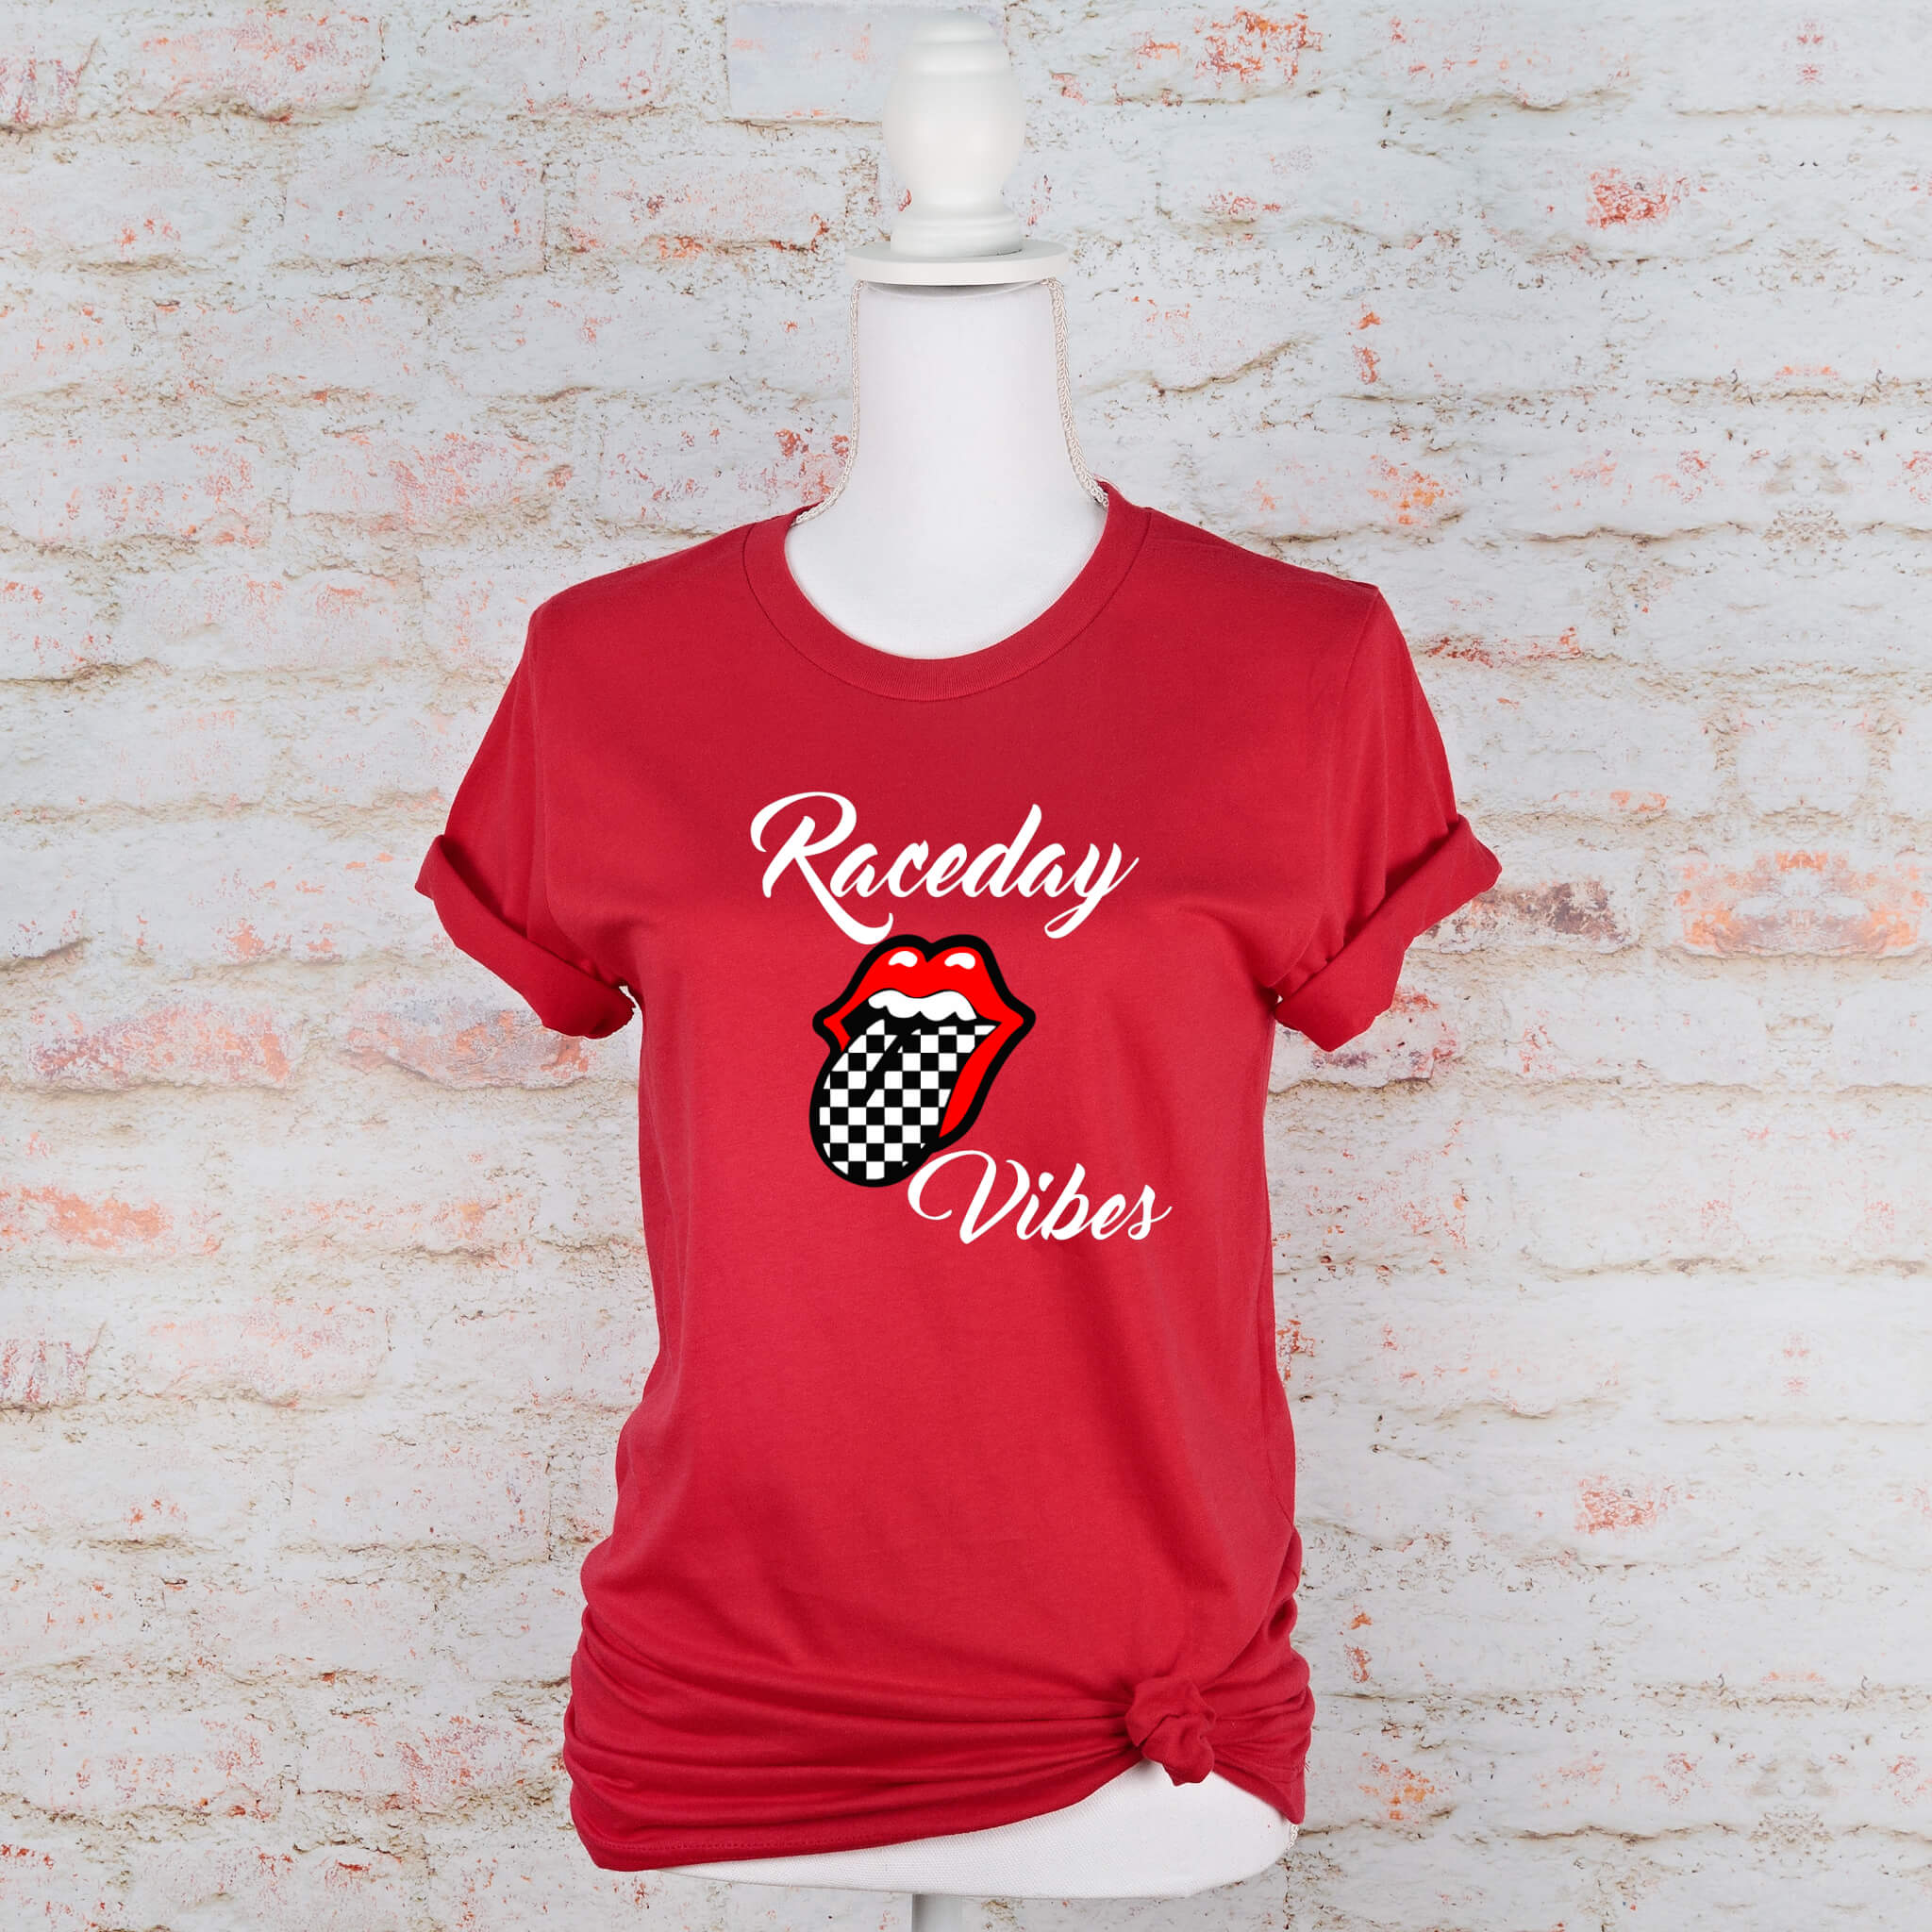 Racing - Raceday Vibes Women's Graphic Print T-Shirt